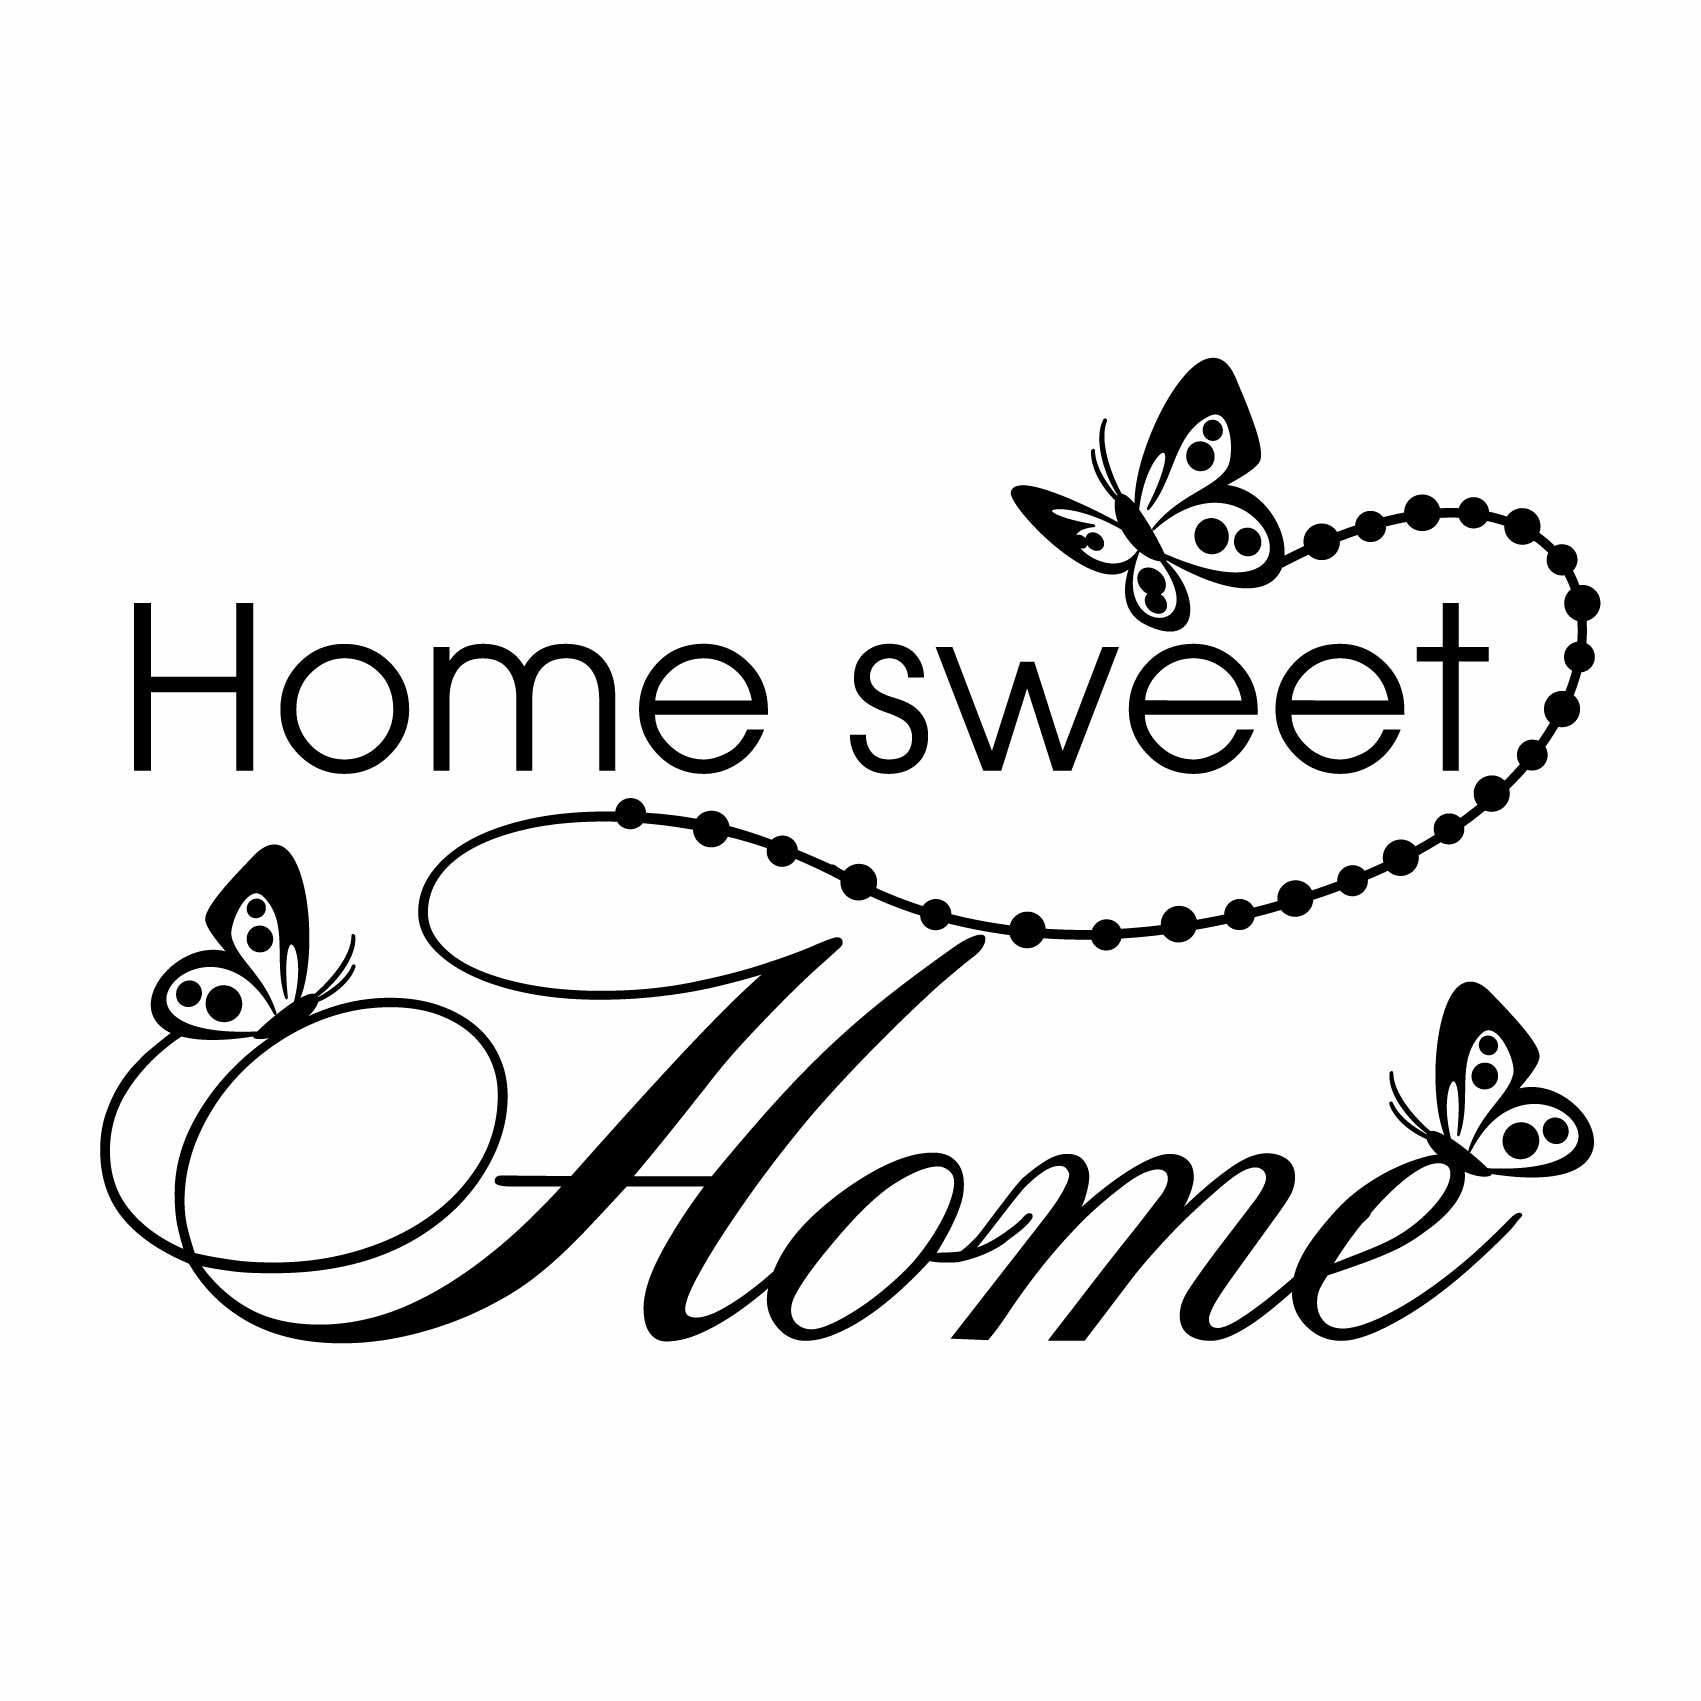 stickers-home-sweet-home-ref10welcome-autocollant-muraux-bienvenue-sticker-mural-welcome-home-sweet-home-entrée-séjour-salon-cuisine-porte-deco-(2)